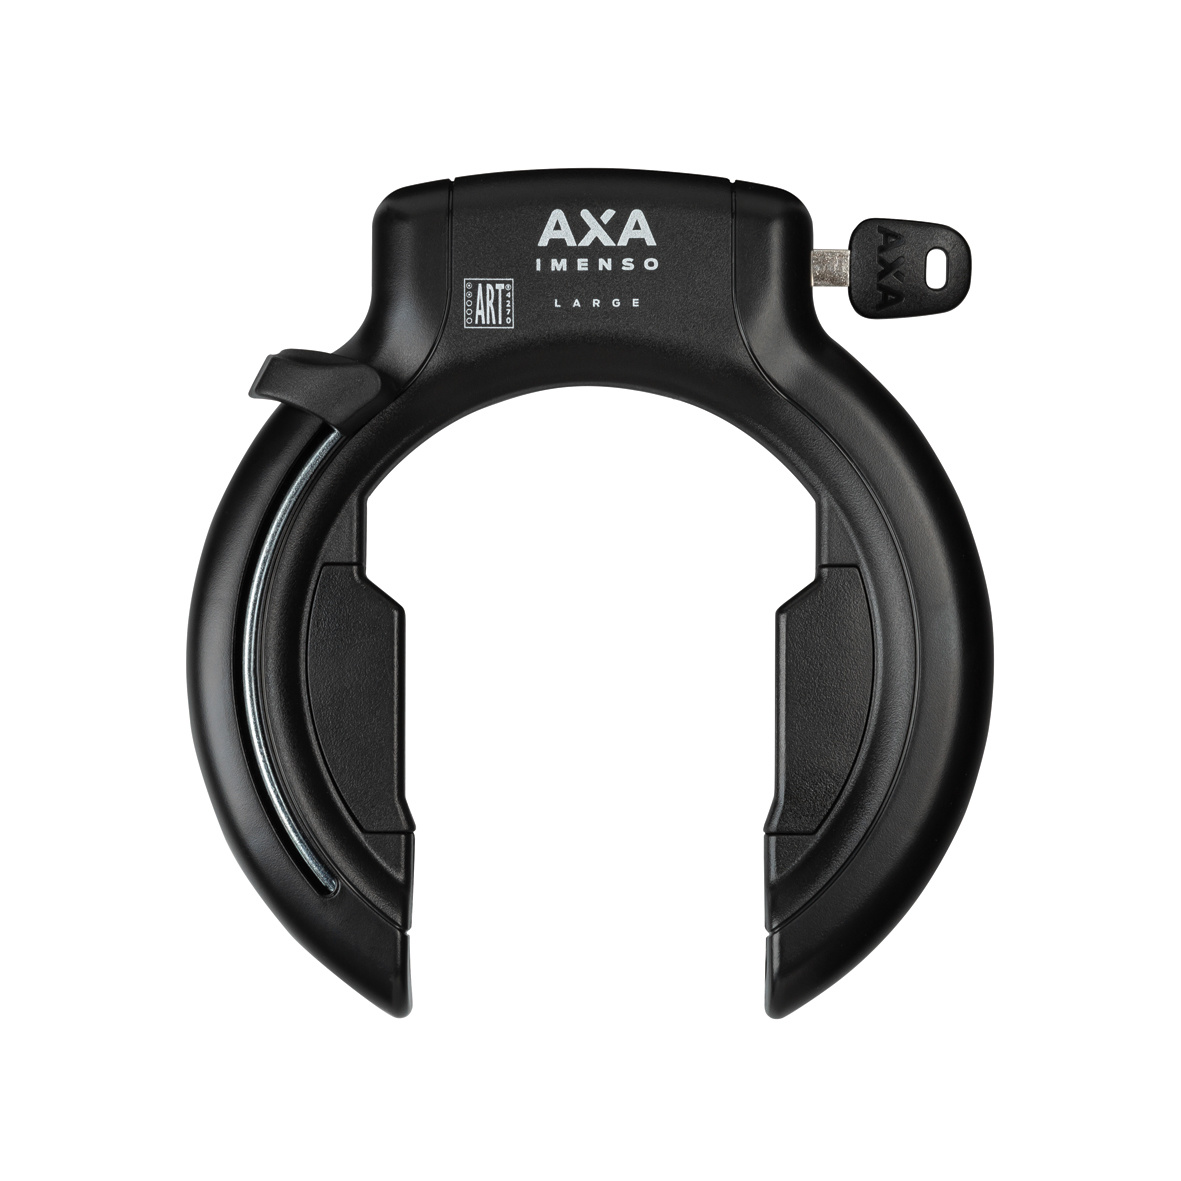 AXA Imenso Large Plus - - Fietsgoedkoper